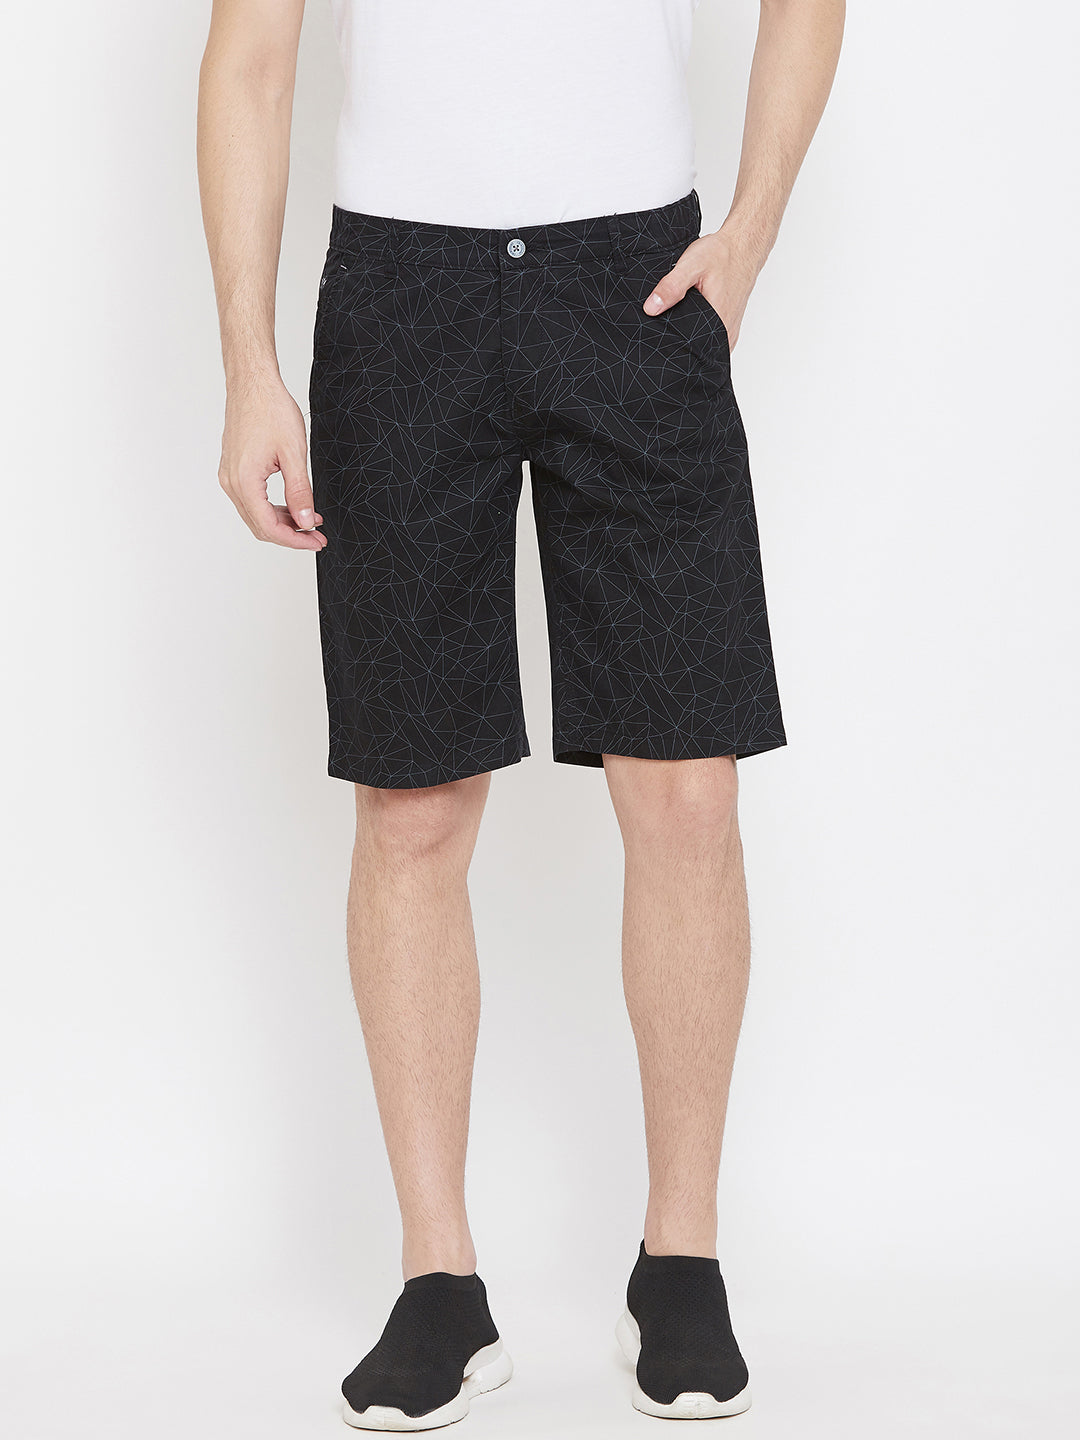 Black Printed shorts - Men Shorts